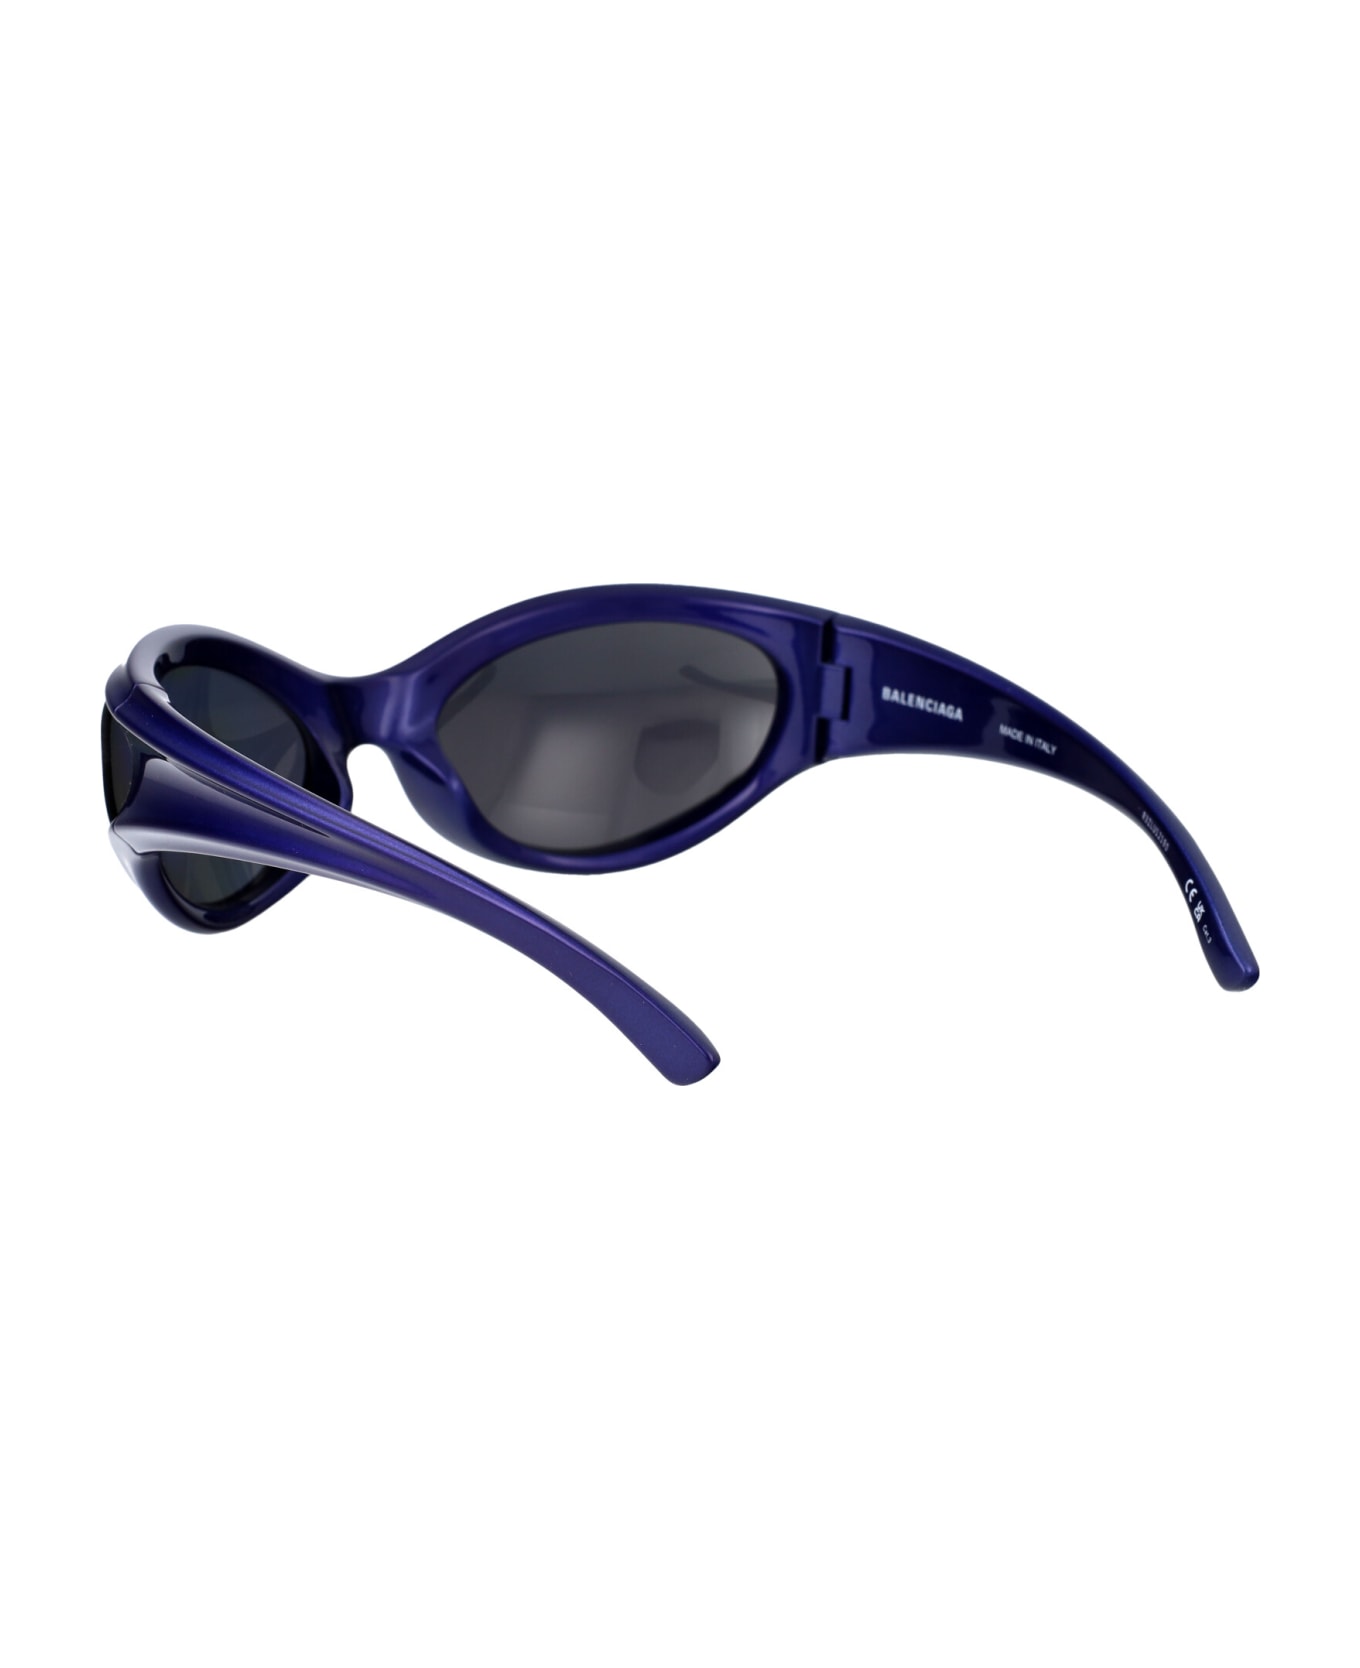 Balenciaga Eyewear Bb0317s Sunglasses - 004 BLUE BLUE BLUE